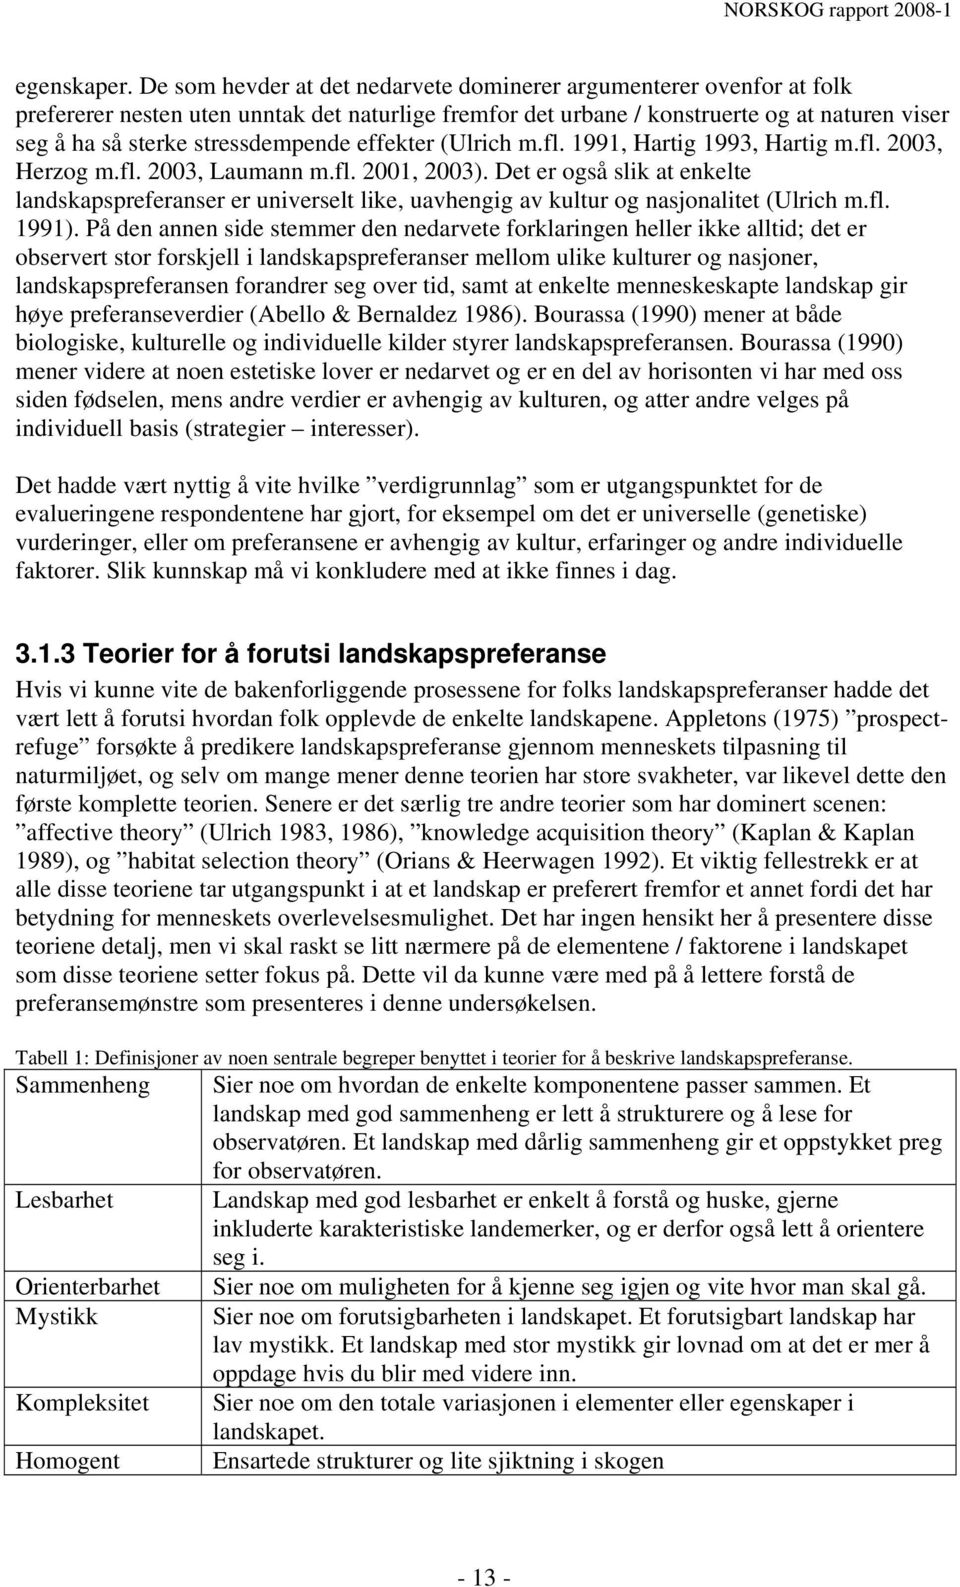 stressdempende effekter (Ulrich m.fl. 1991, Hartig 1993, Hartig m.fl. 2003, Herzog m.fl. 2003, Laumann m.fl. 2001, 2003).